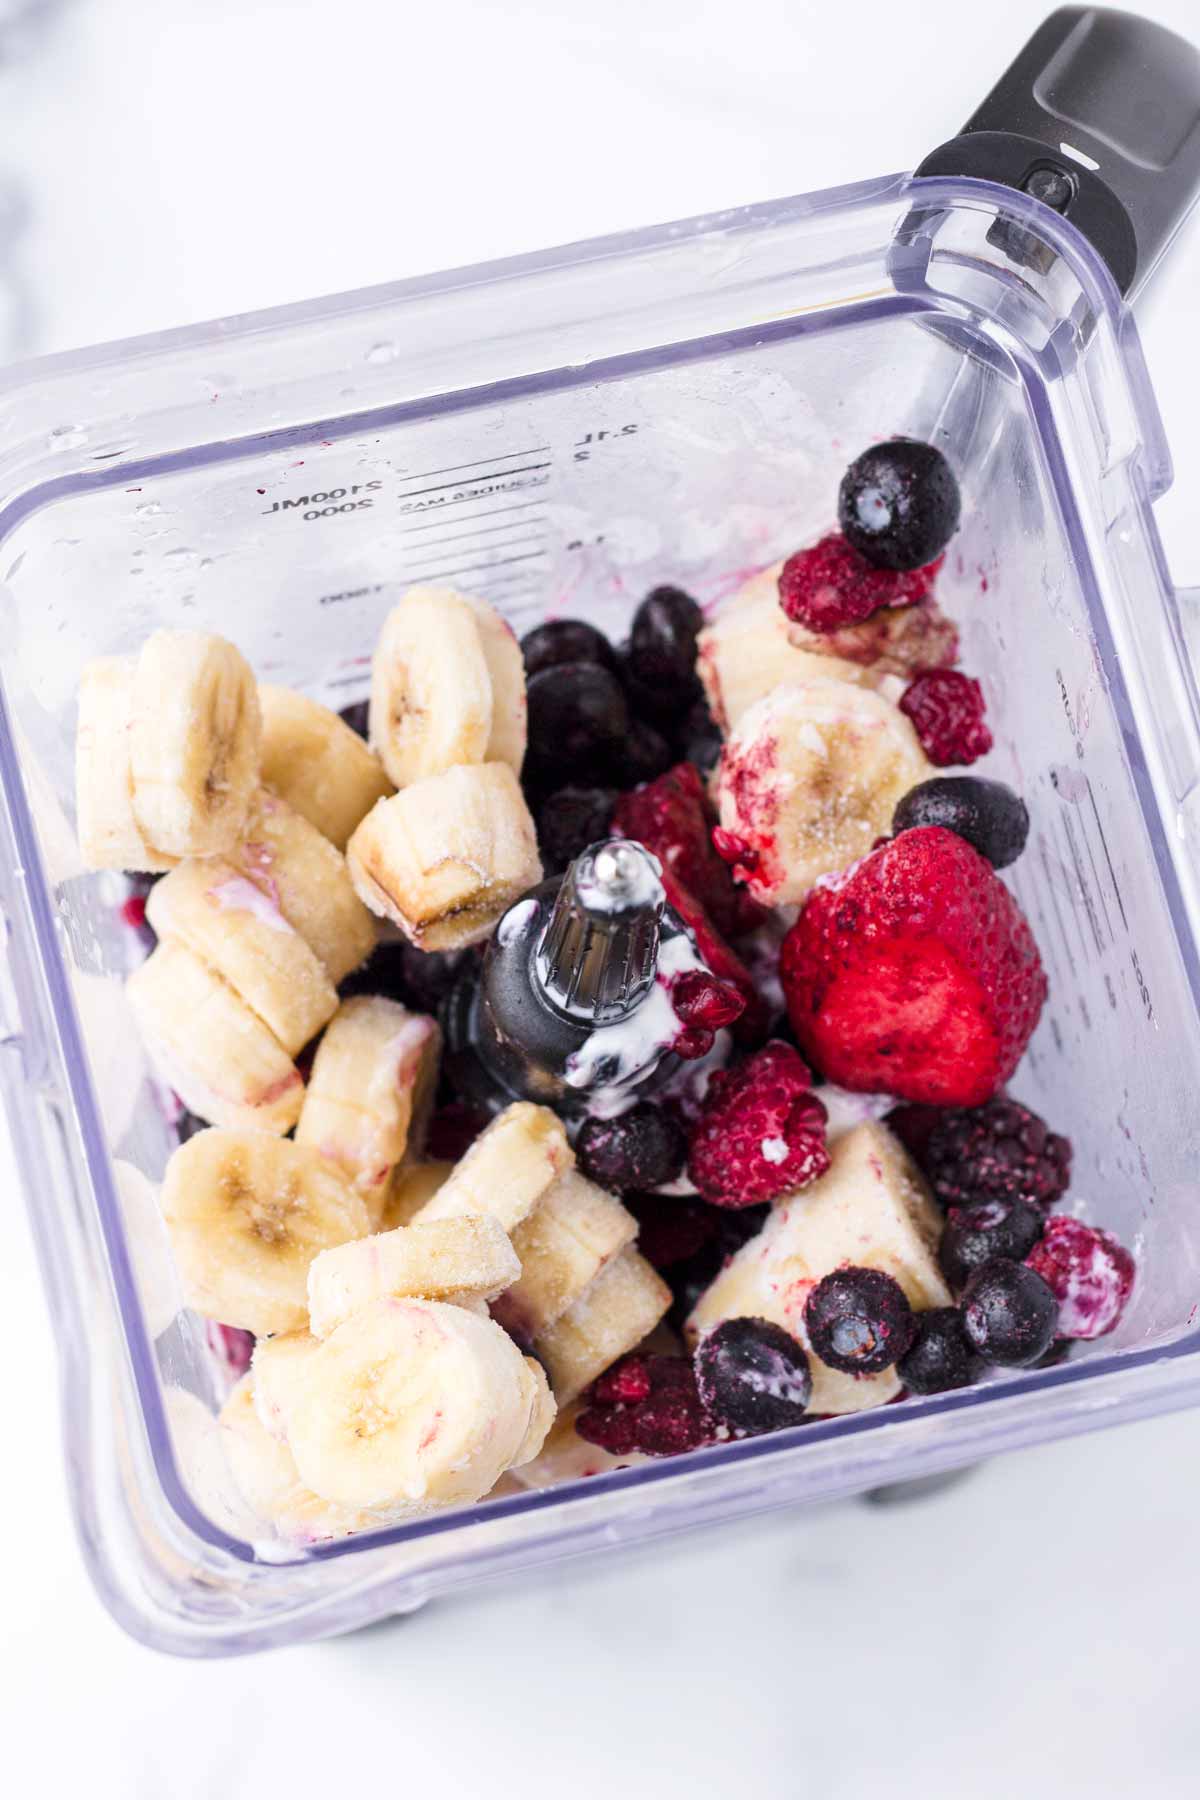 diced bananas, berries, milk, and yogurt inside a blender